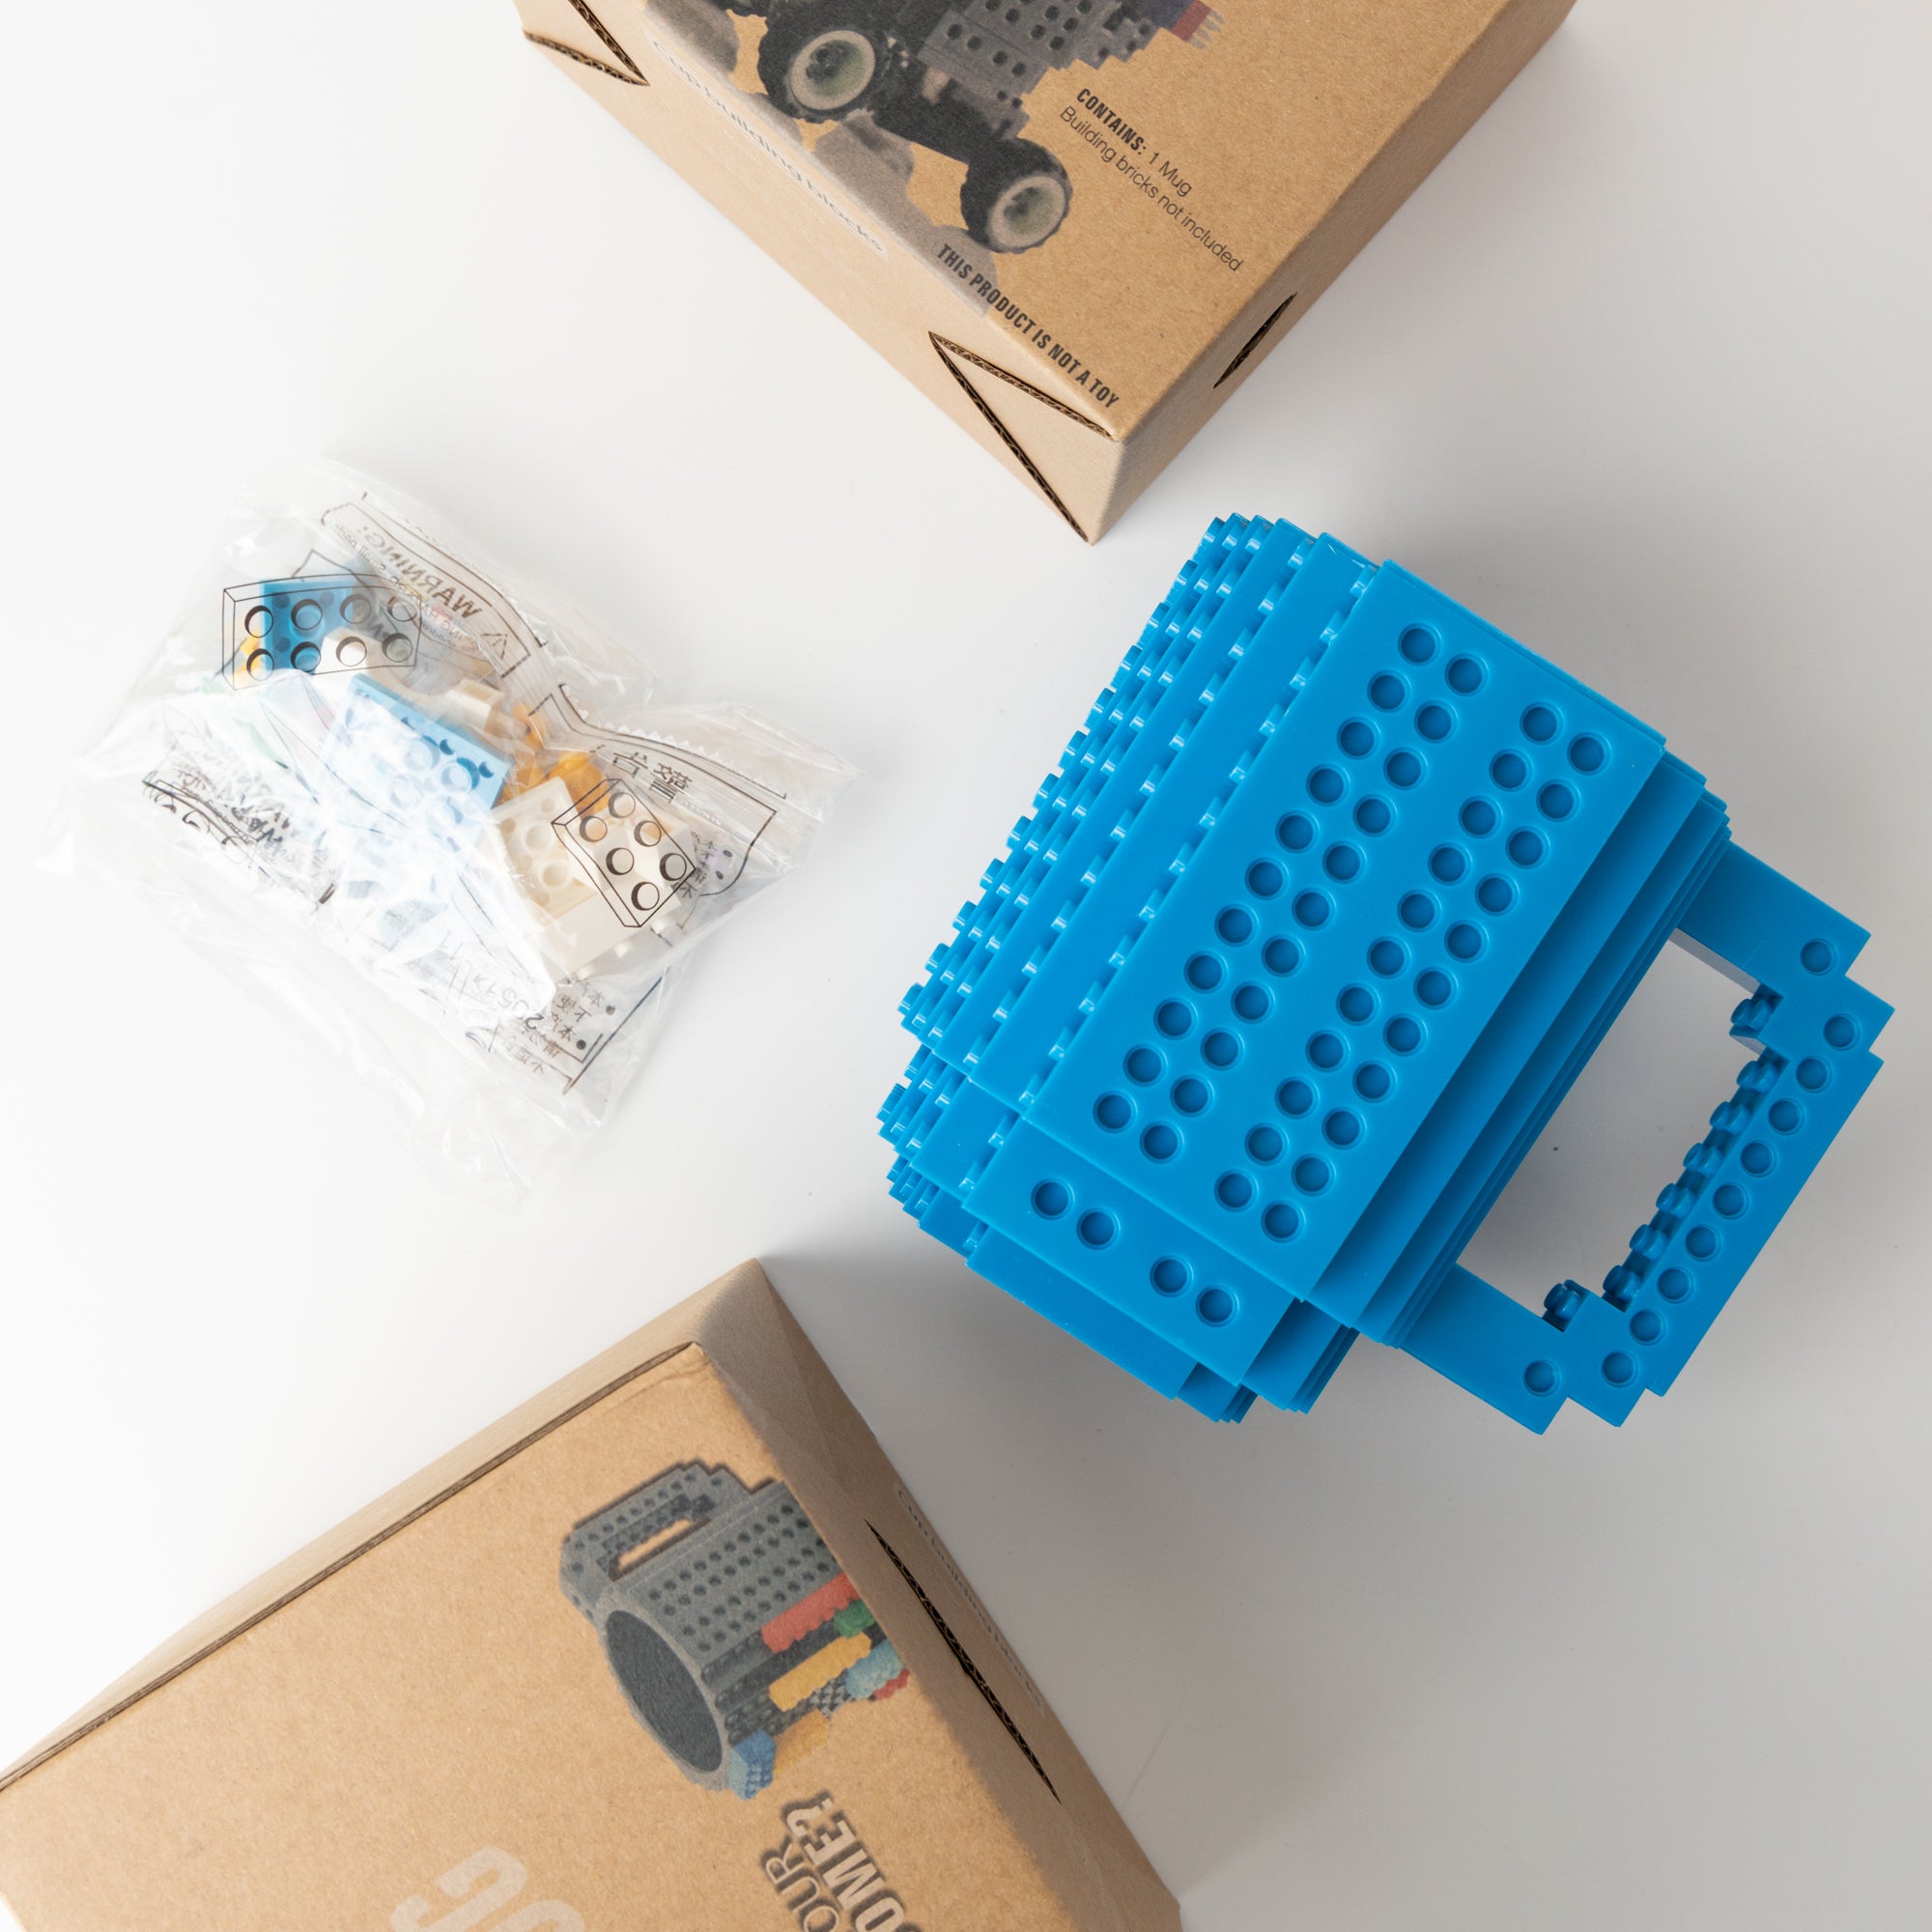 Build on Brick Mugs (Lego Compatible!)